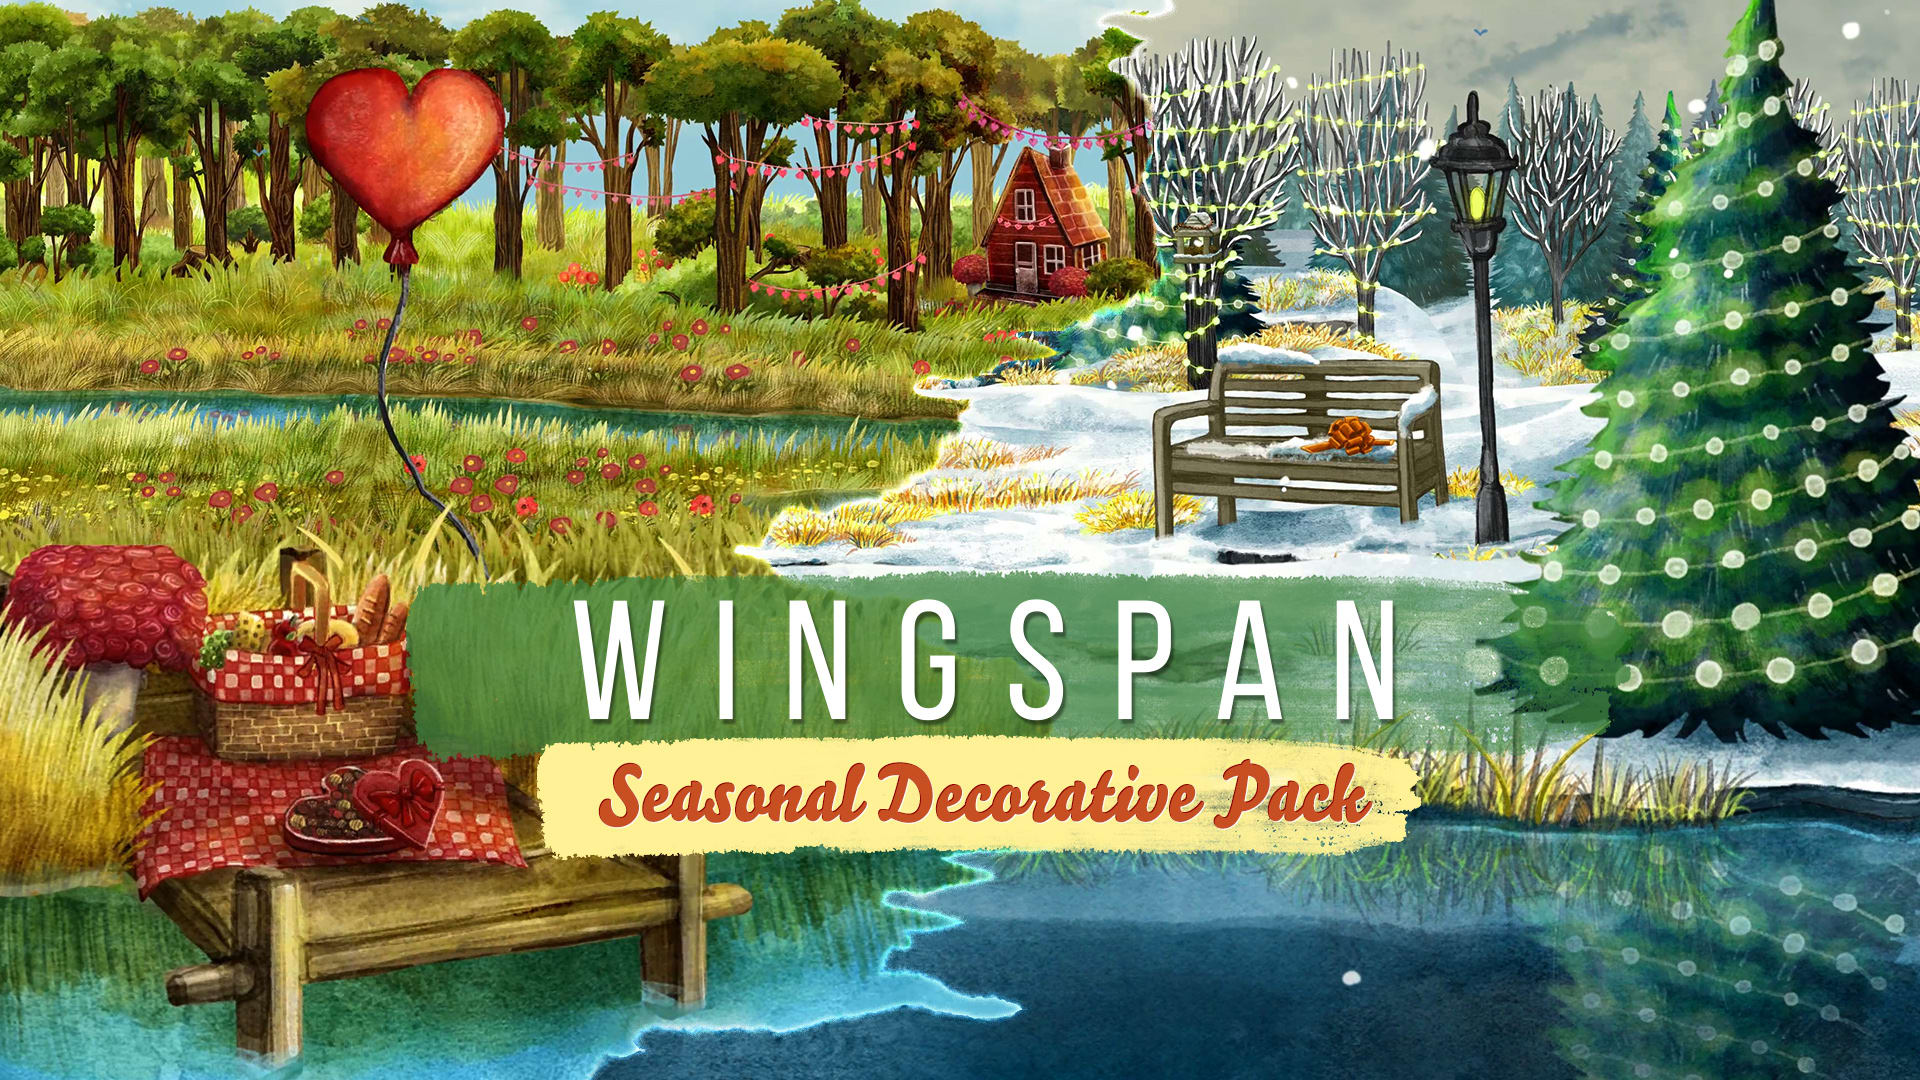 Seasonal Decorative Pack